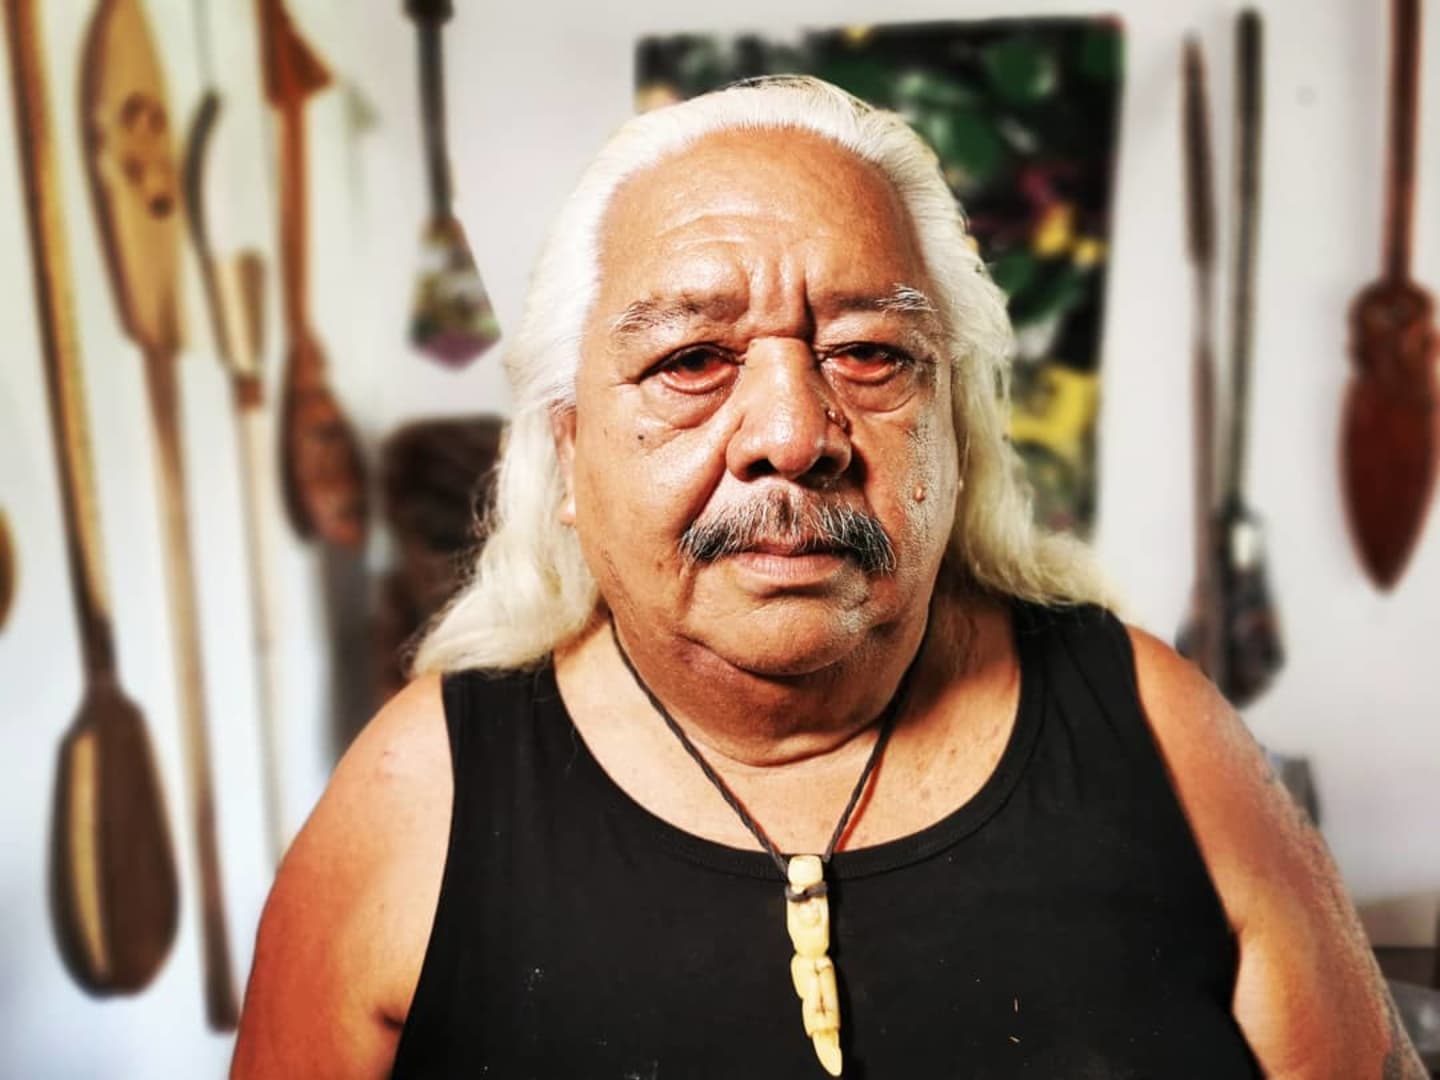 Mike Tavioni, Rarotonga land owner and artist